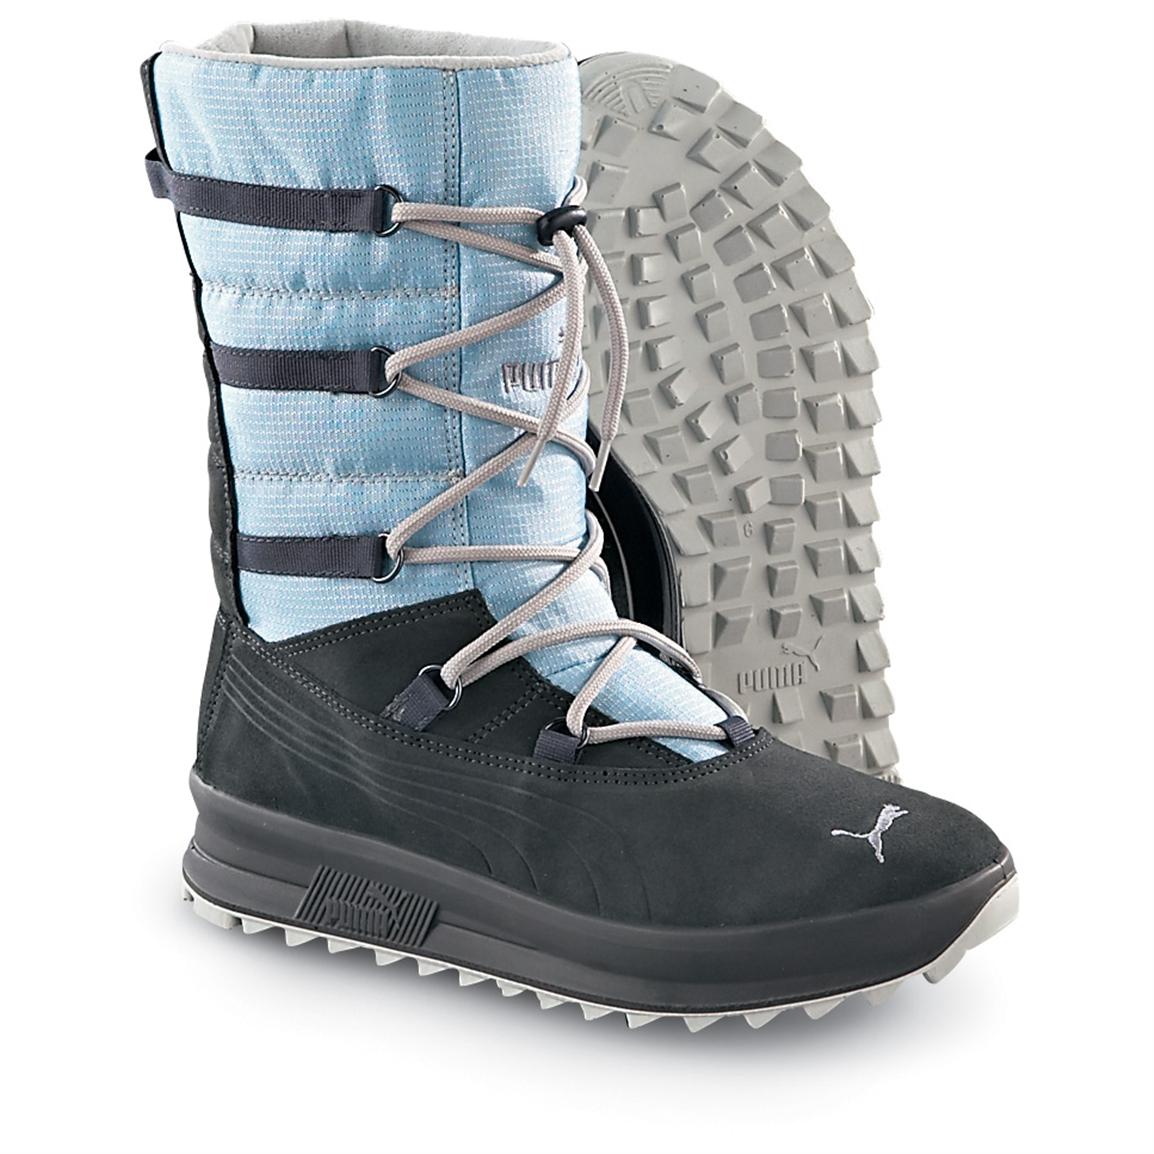 puma women's snow boots